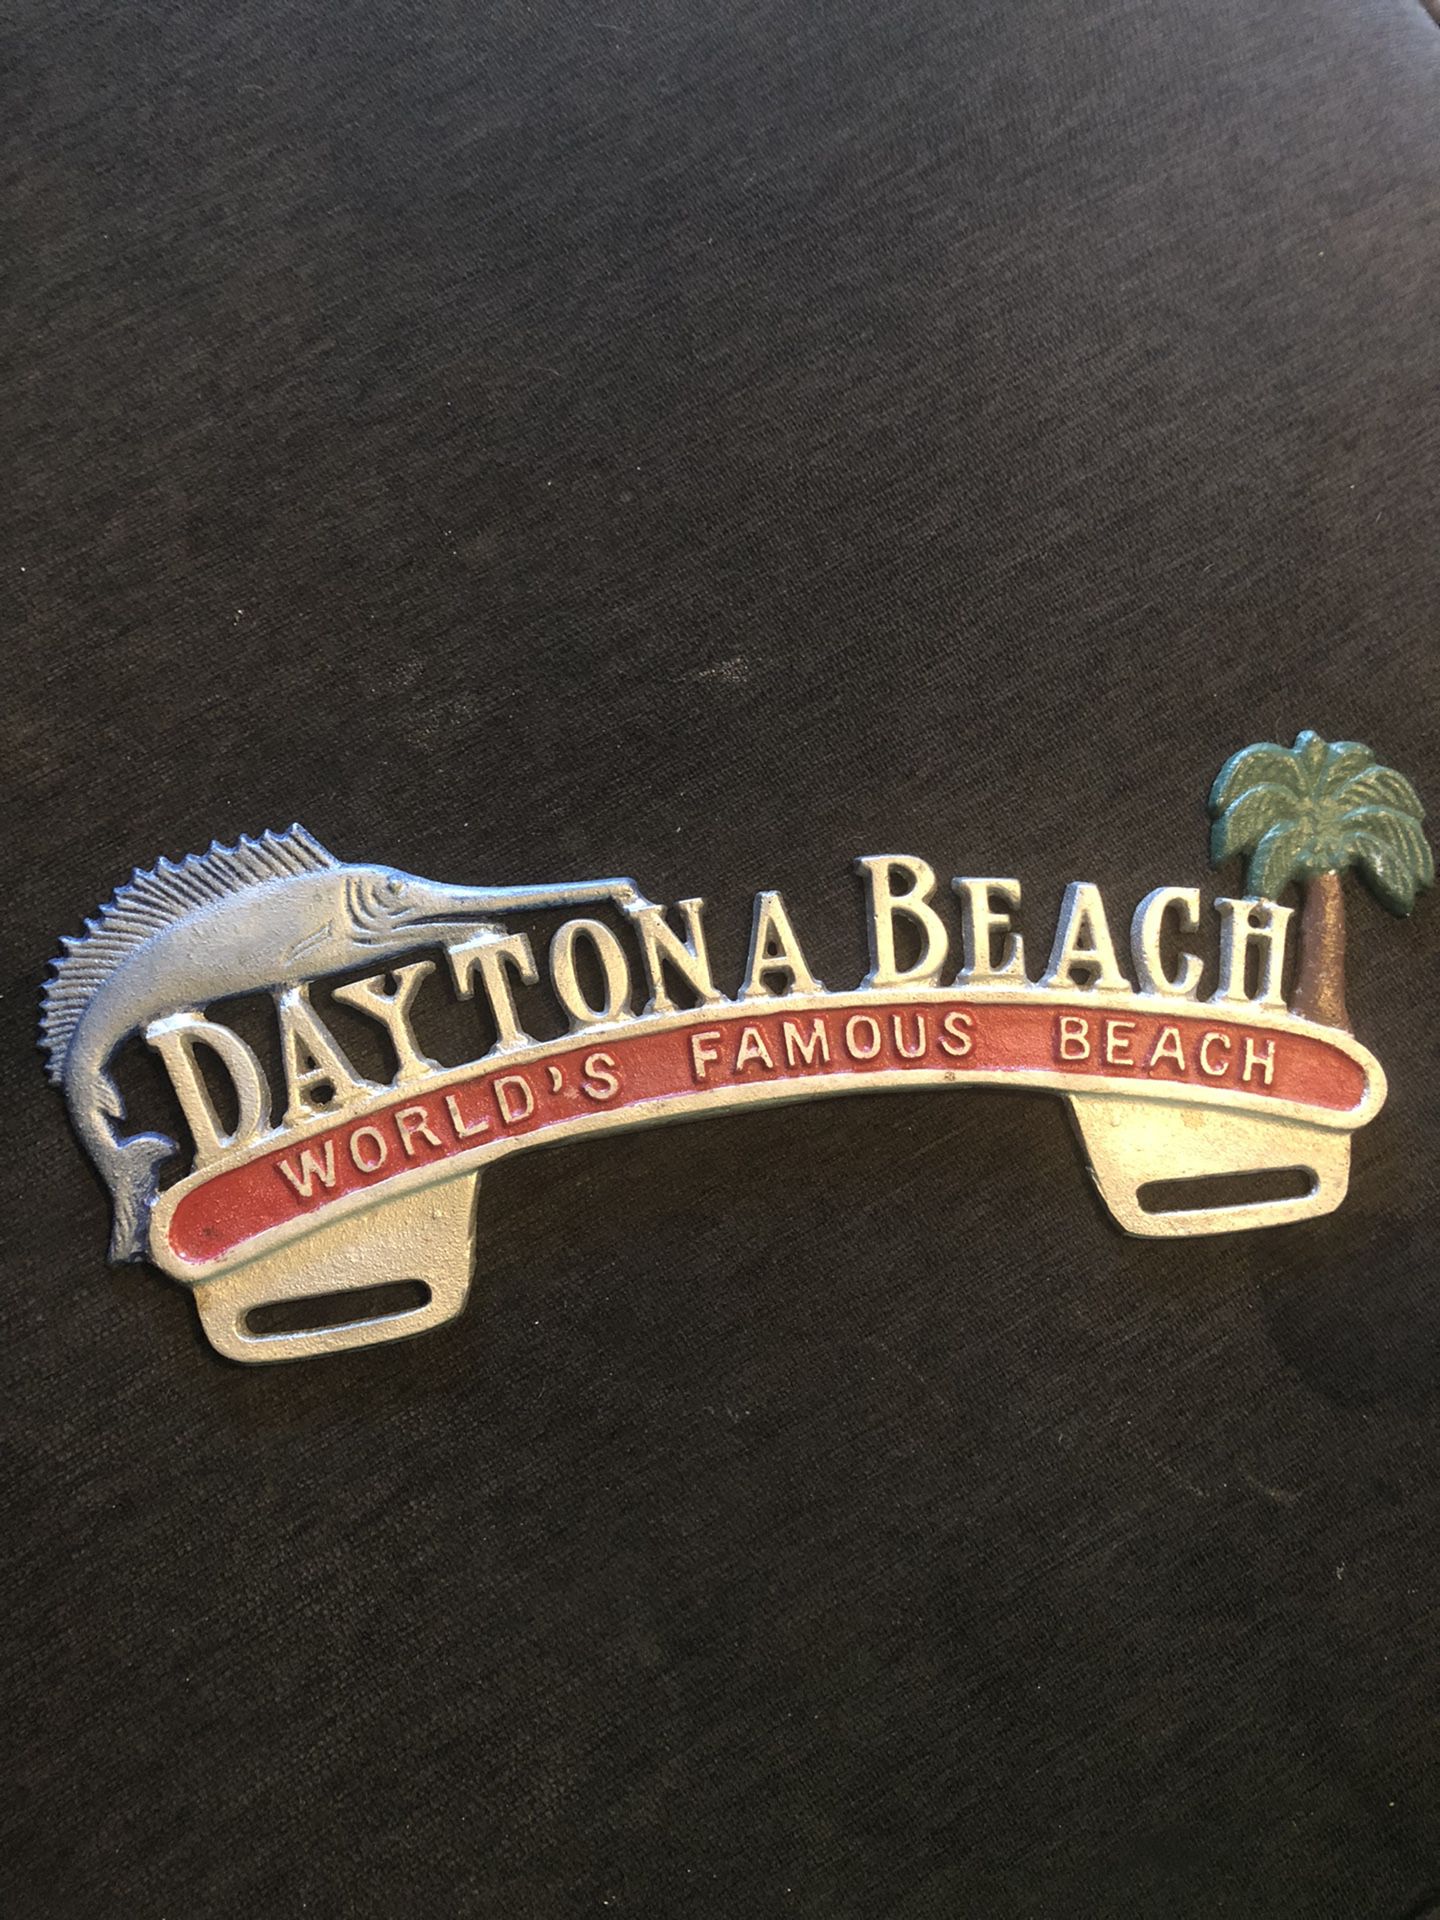 12” Metal Daytona Beach “World’s Famous Beach” License Plate Topper